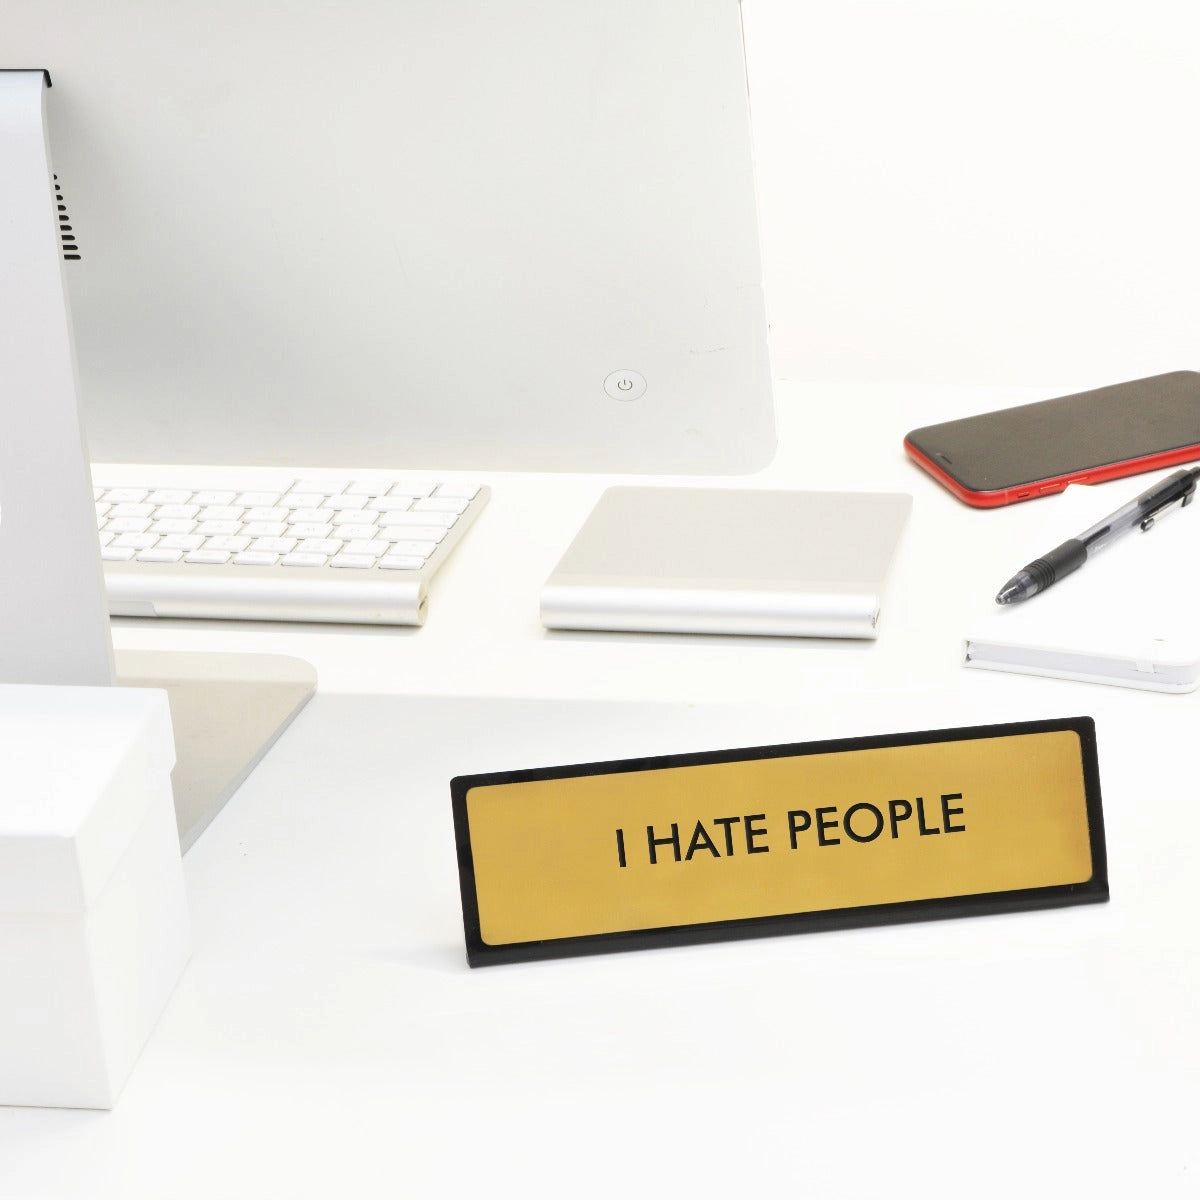 Schild "I HATE PEOPLE"